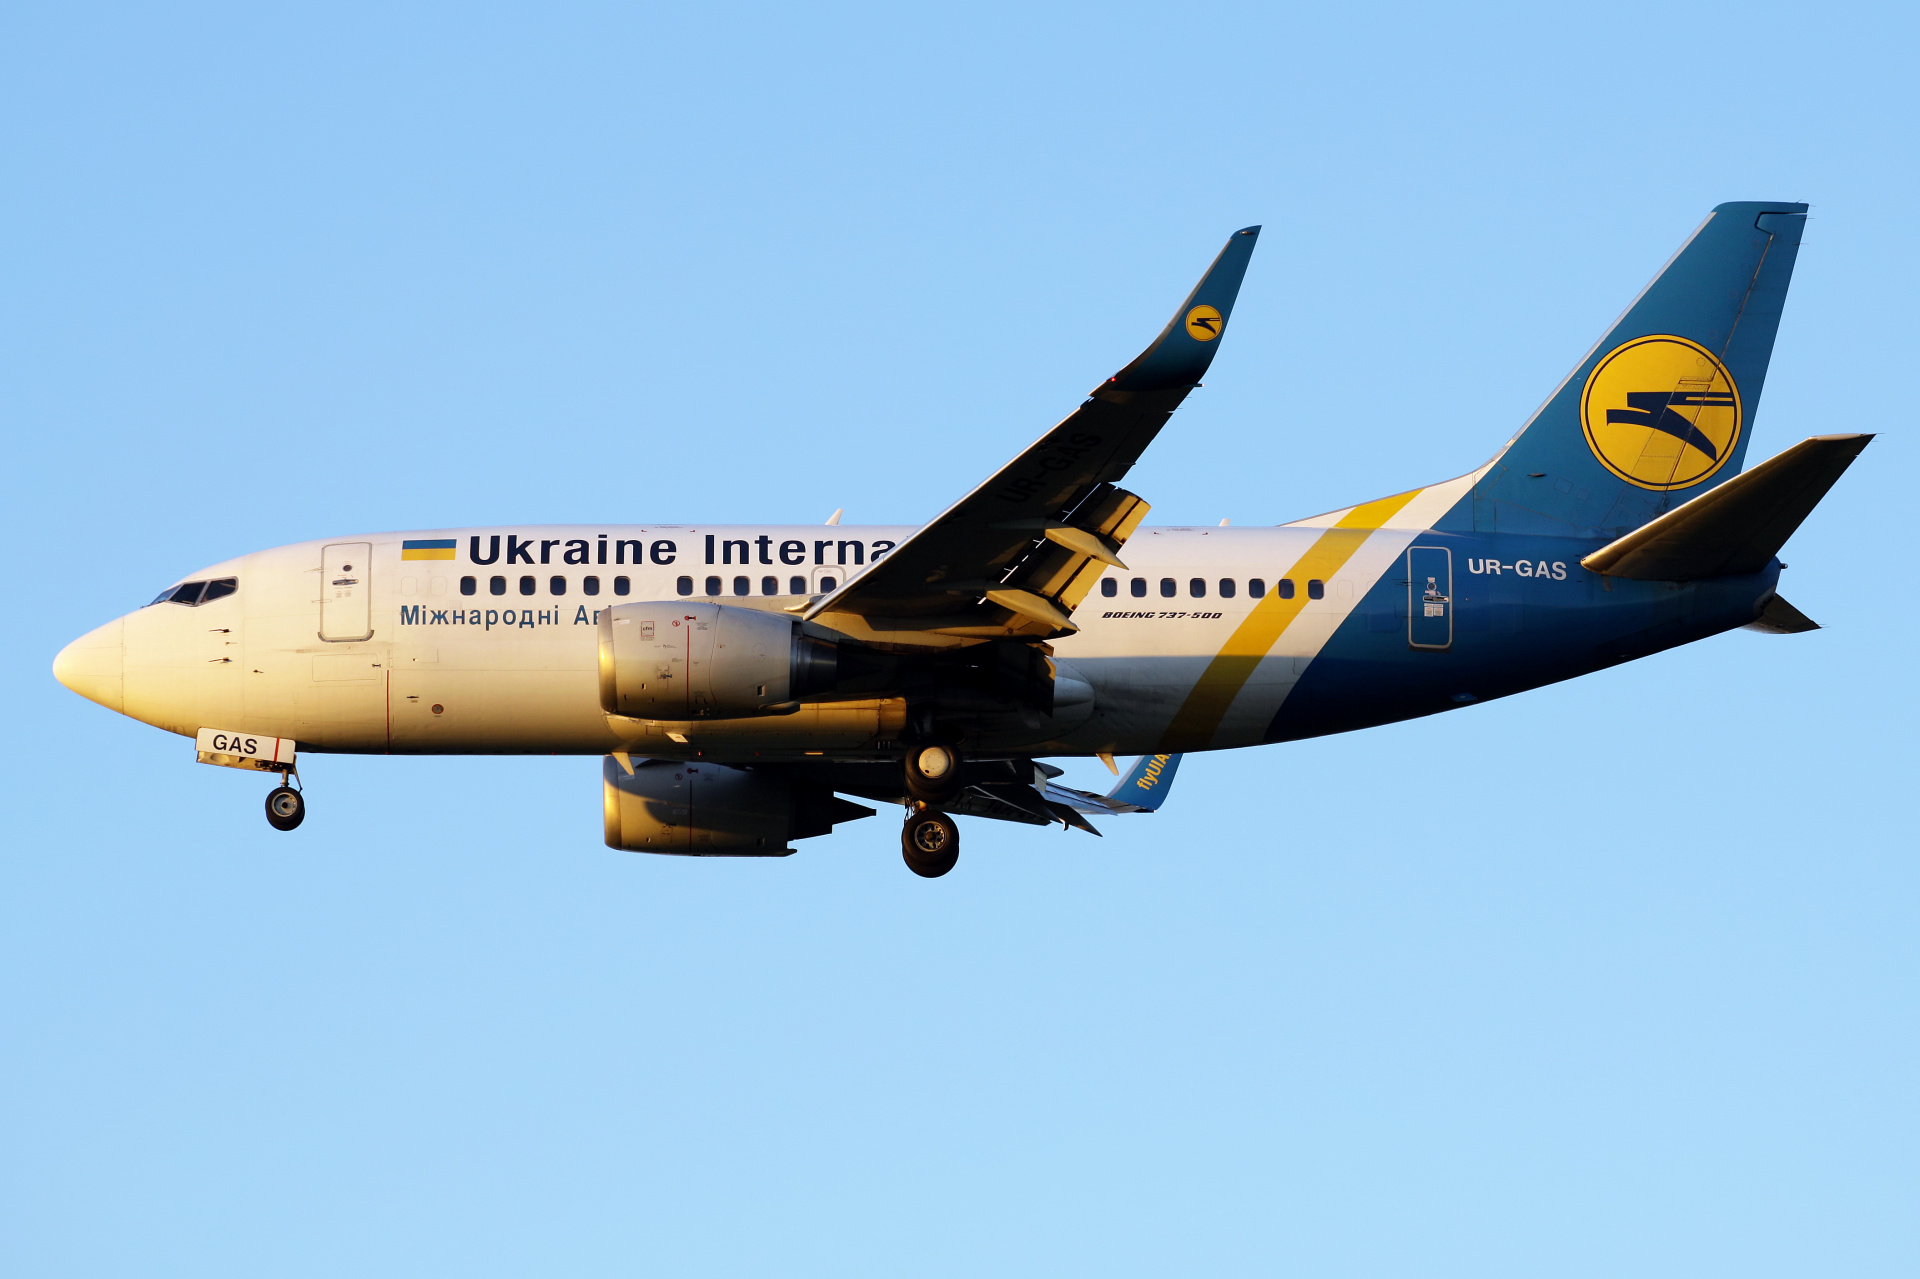 UR-GAS, Ukraine International Airlines (Aircraft » EPWA Spotting » Boeing 737-500)